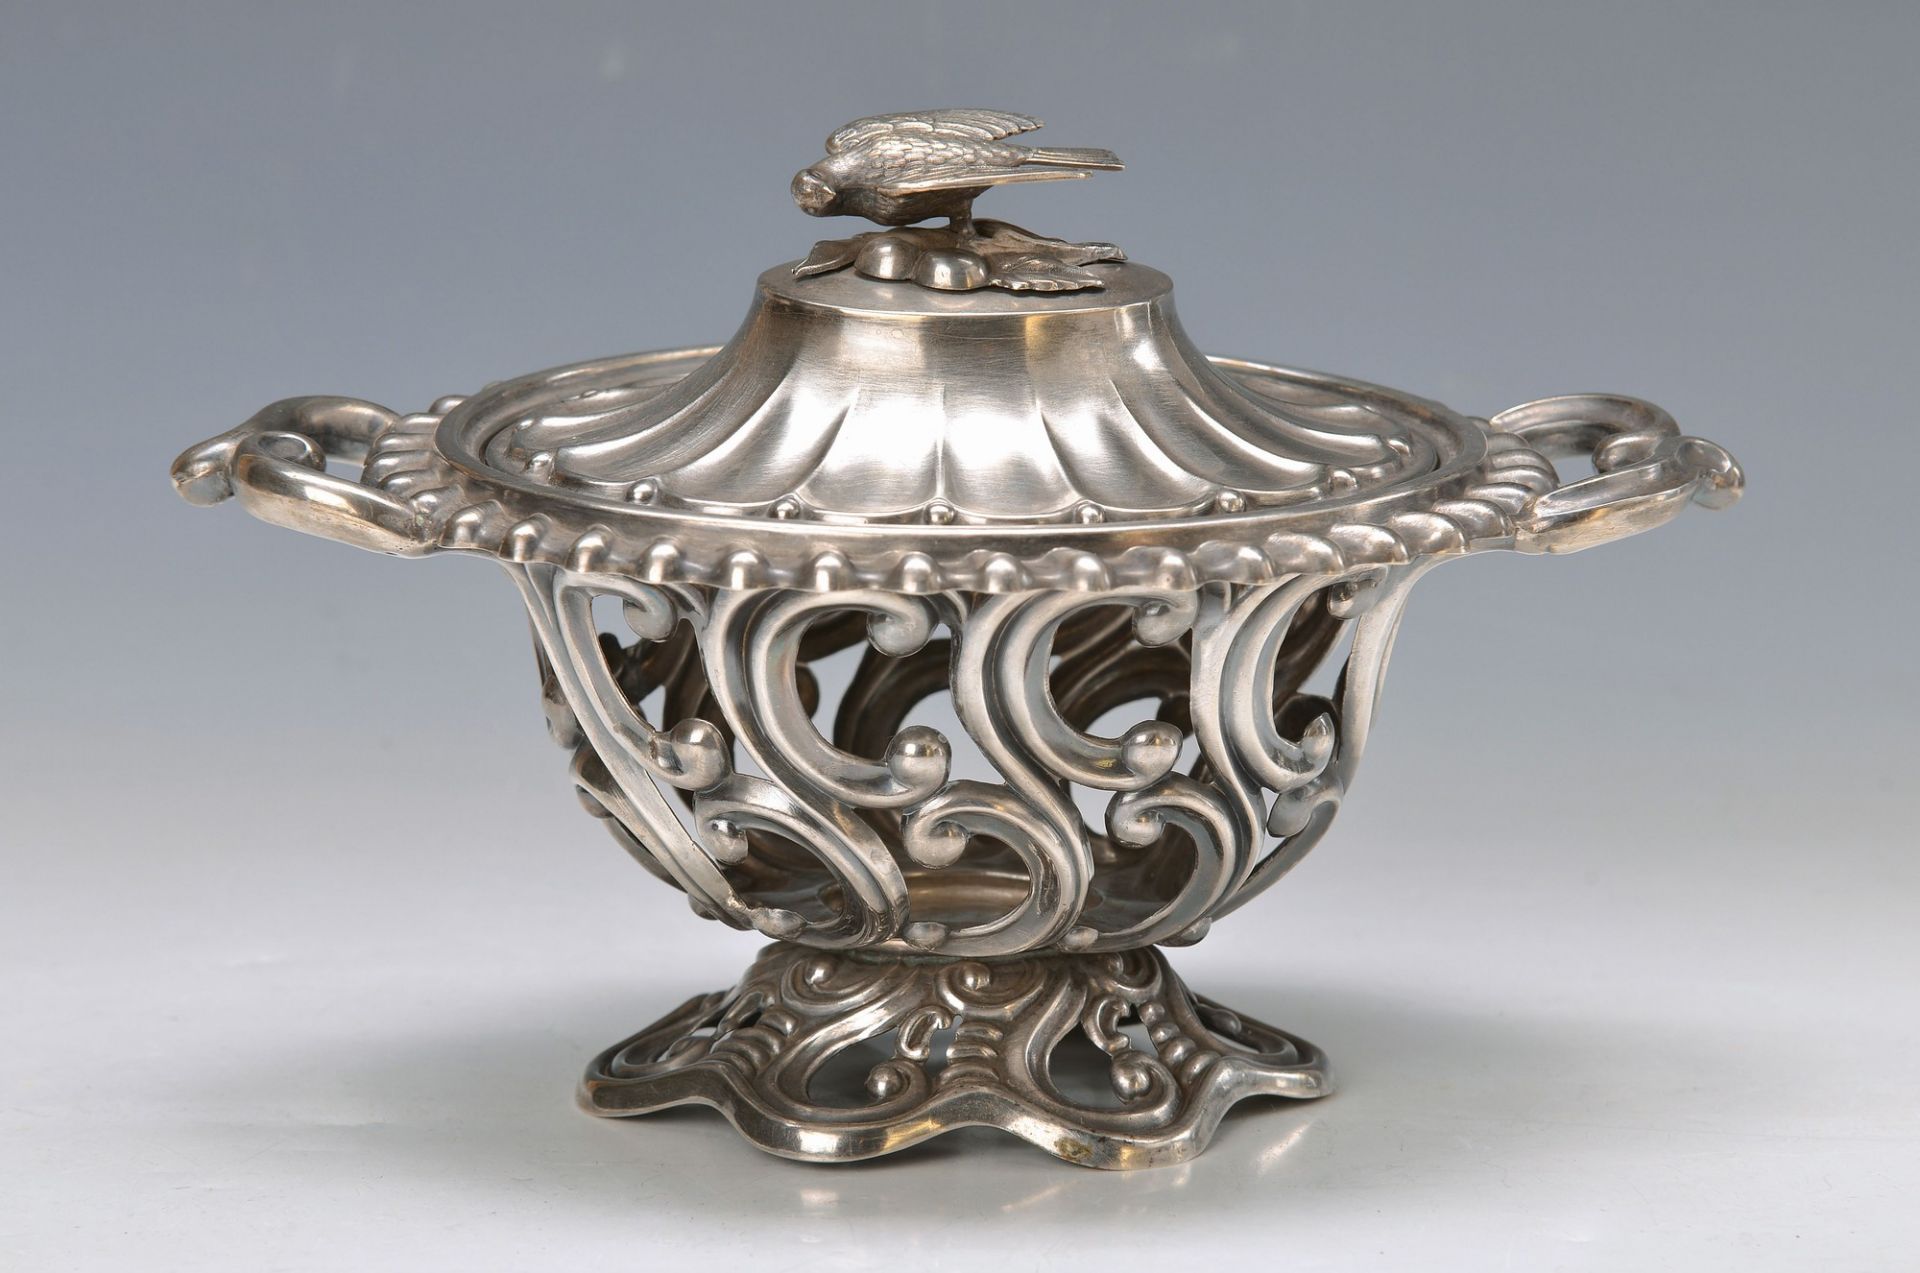 decorative vessel, France, around 1860, 900 silver, in breakthrough work, lid coronation in shape